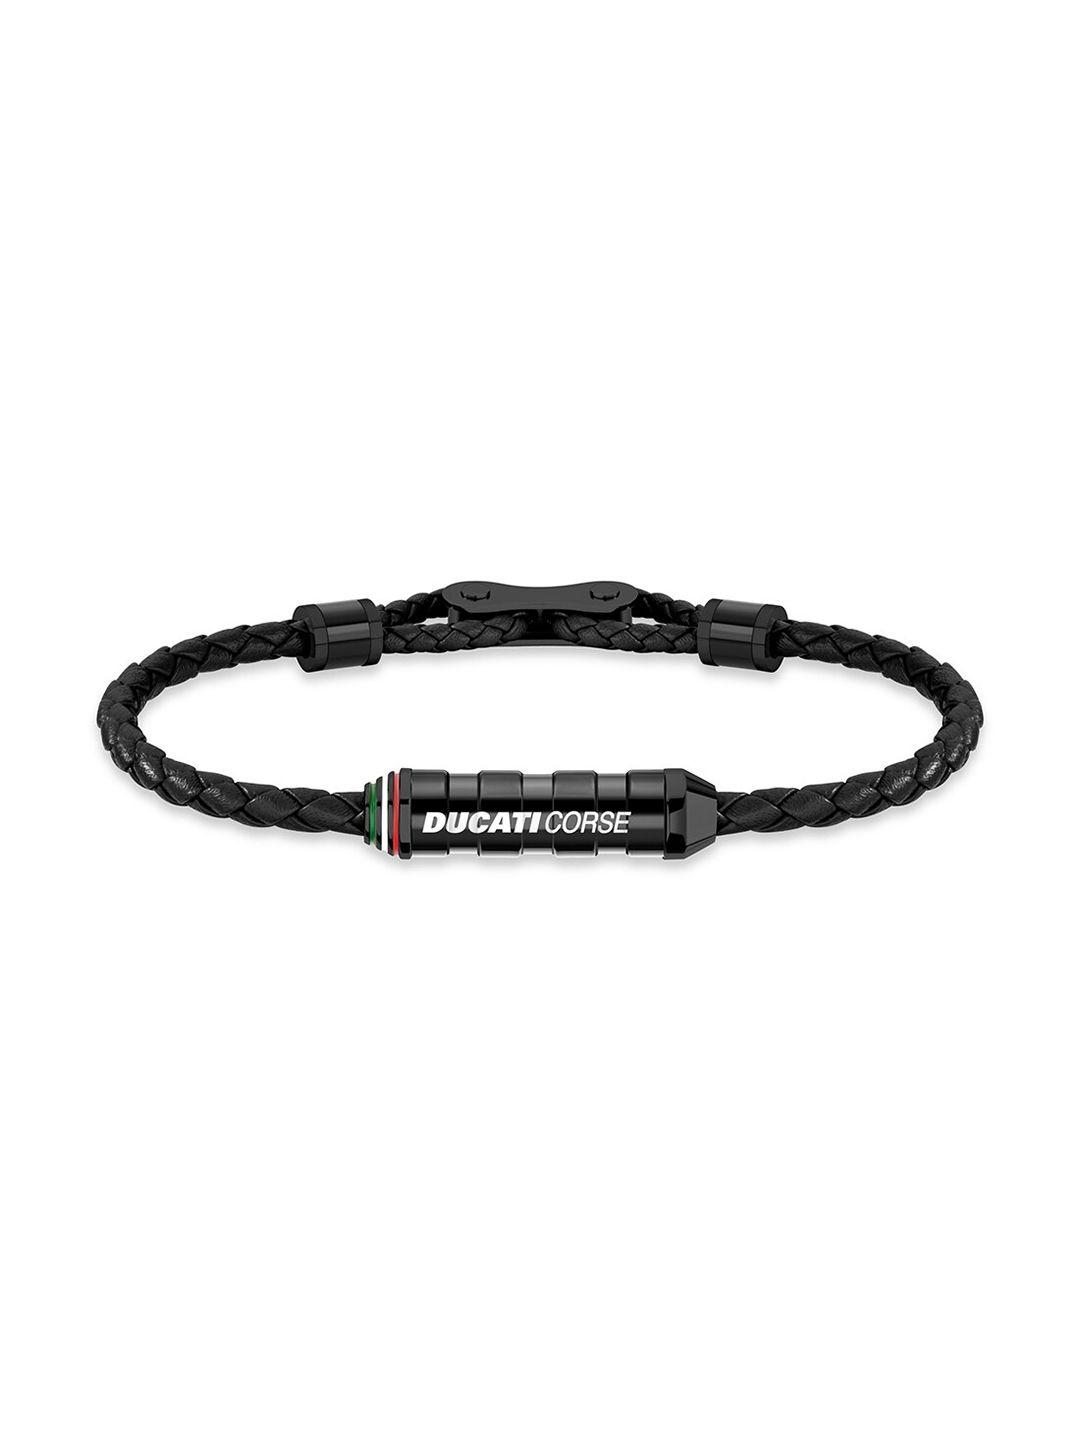 ducati corse men grey & black bangle-style bracelet